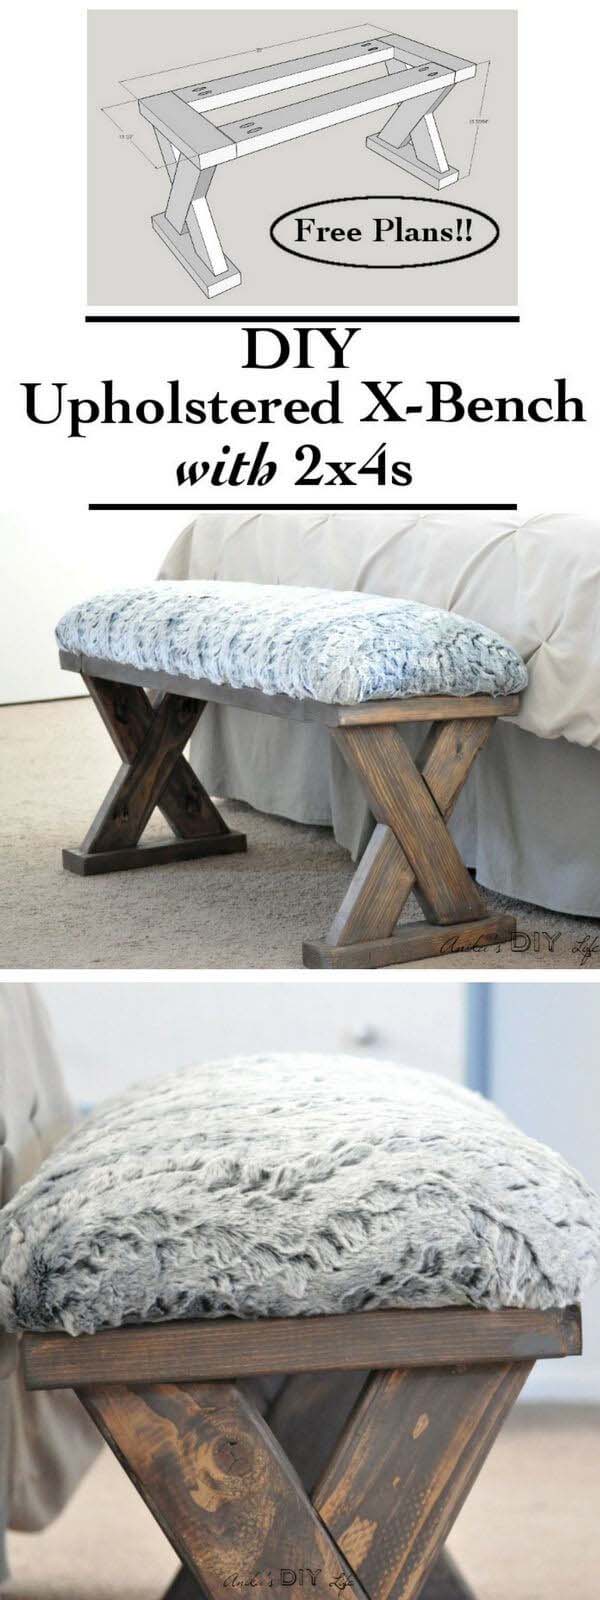 DIY Upholstered X-Bench #diy #wood #crafts #decorhomeideas